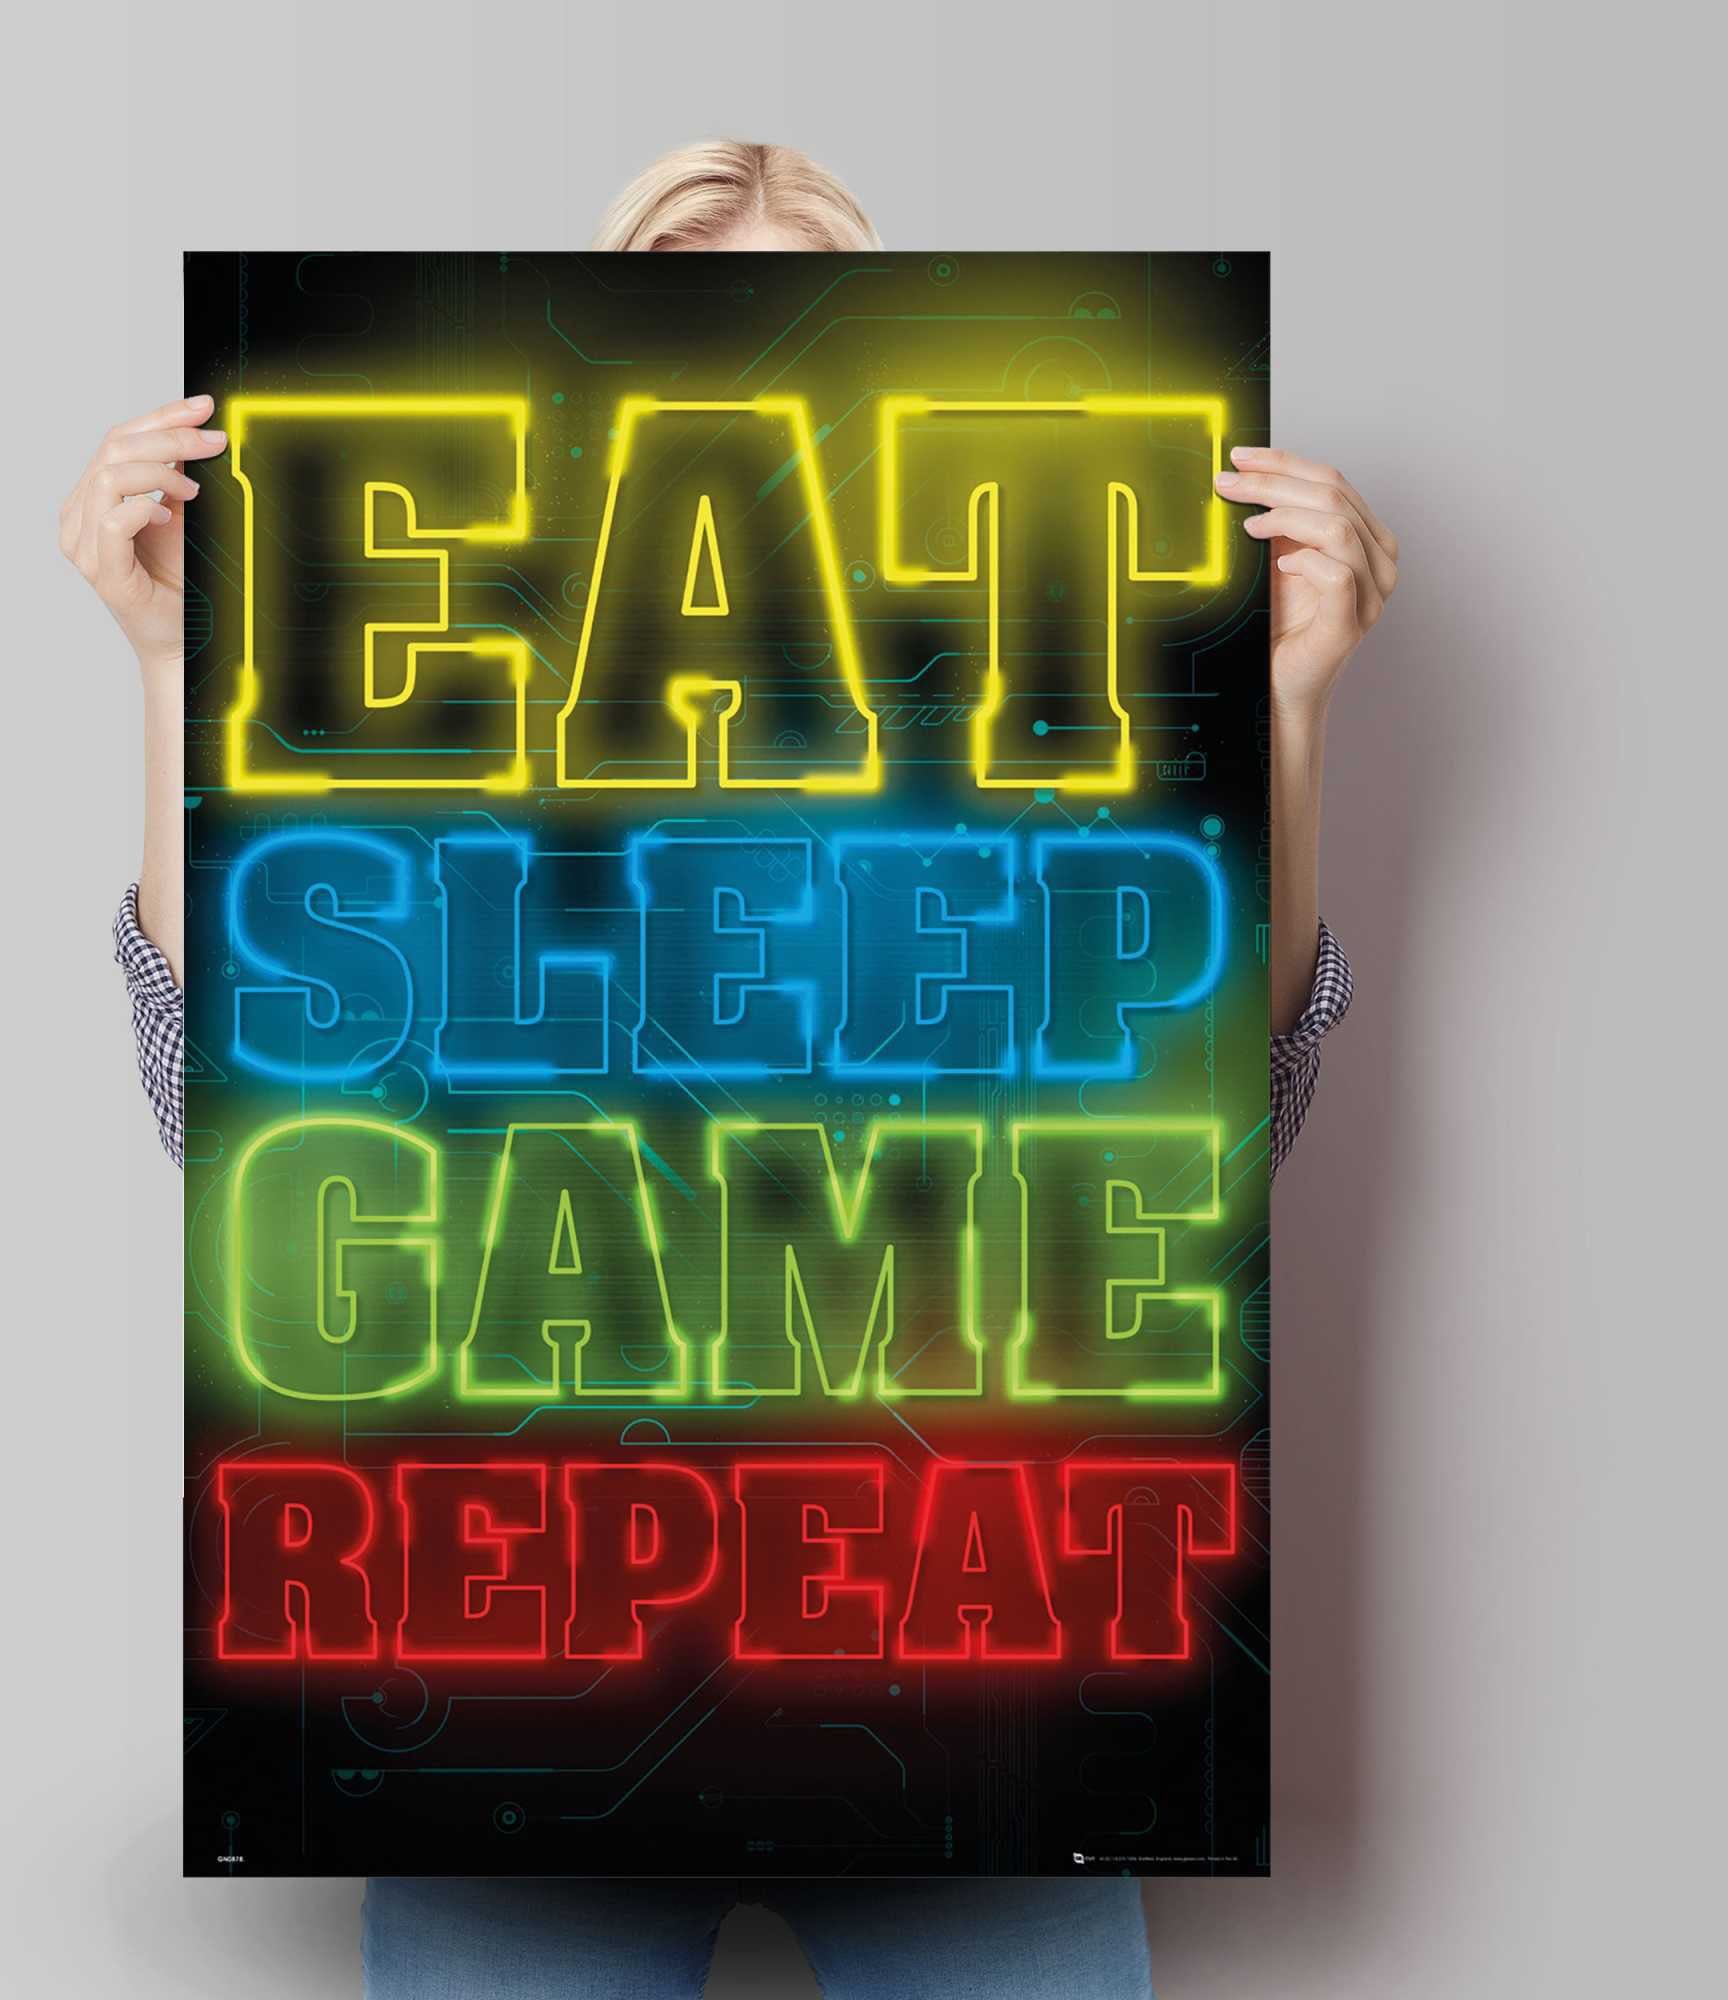 St) Poster game sleep repeat, Eat Poster Zocken Reinders! (1 Spiele